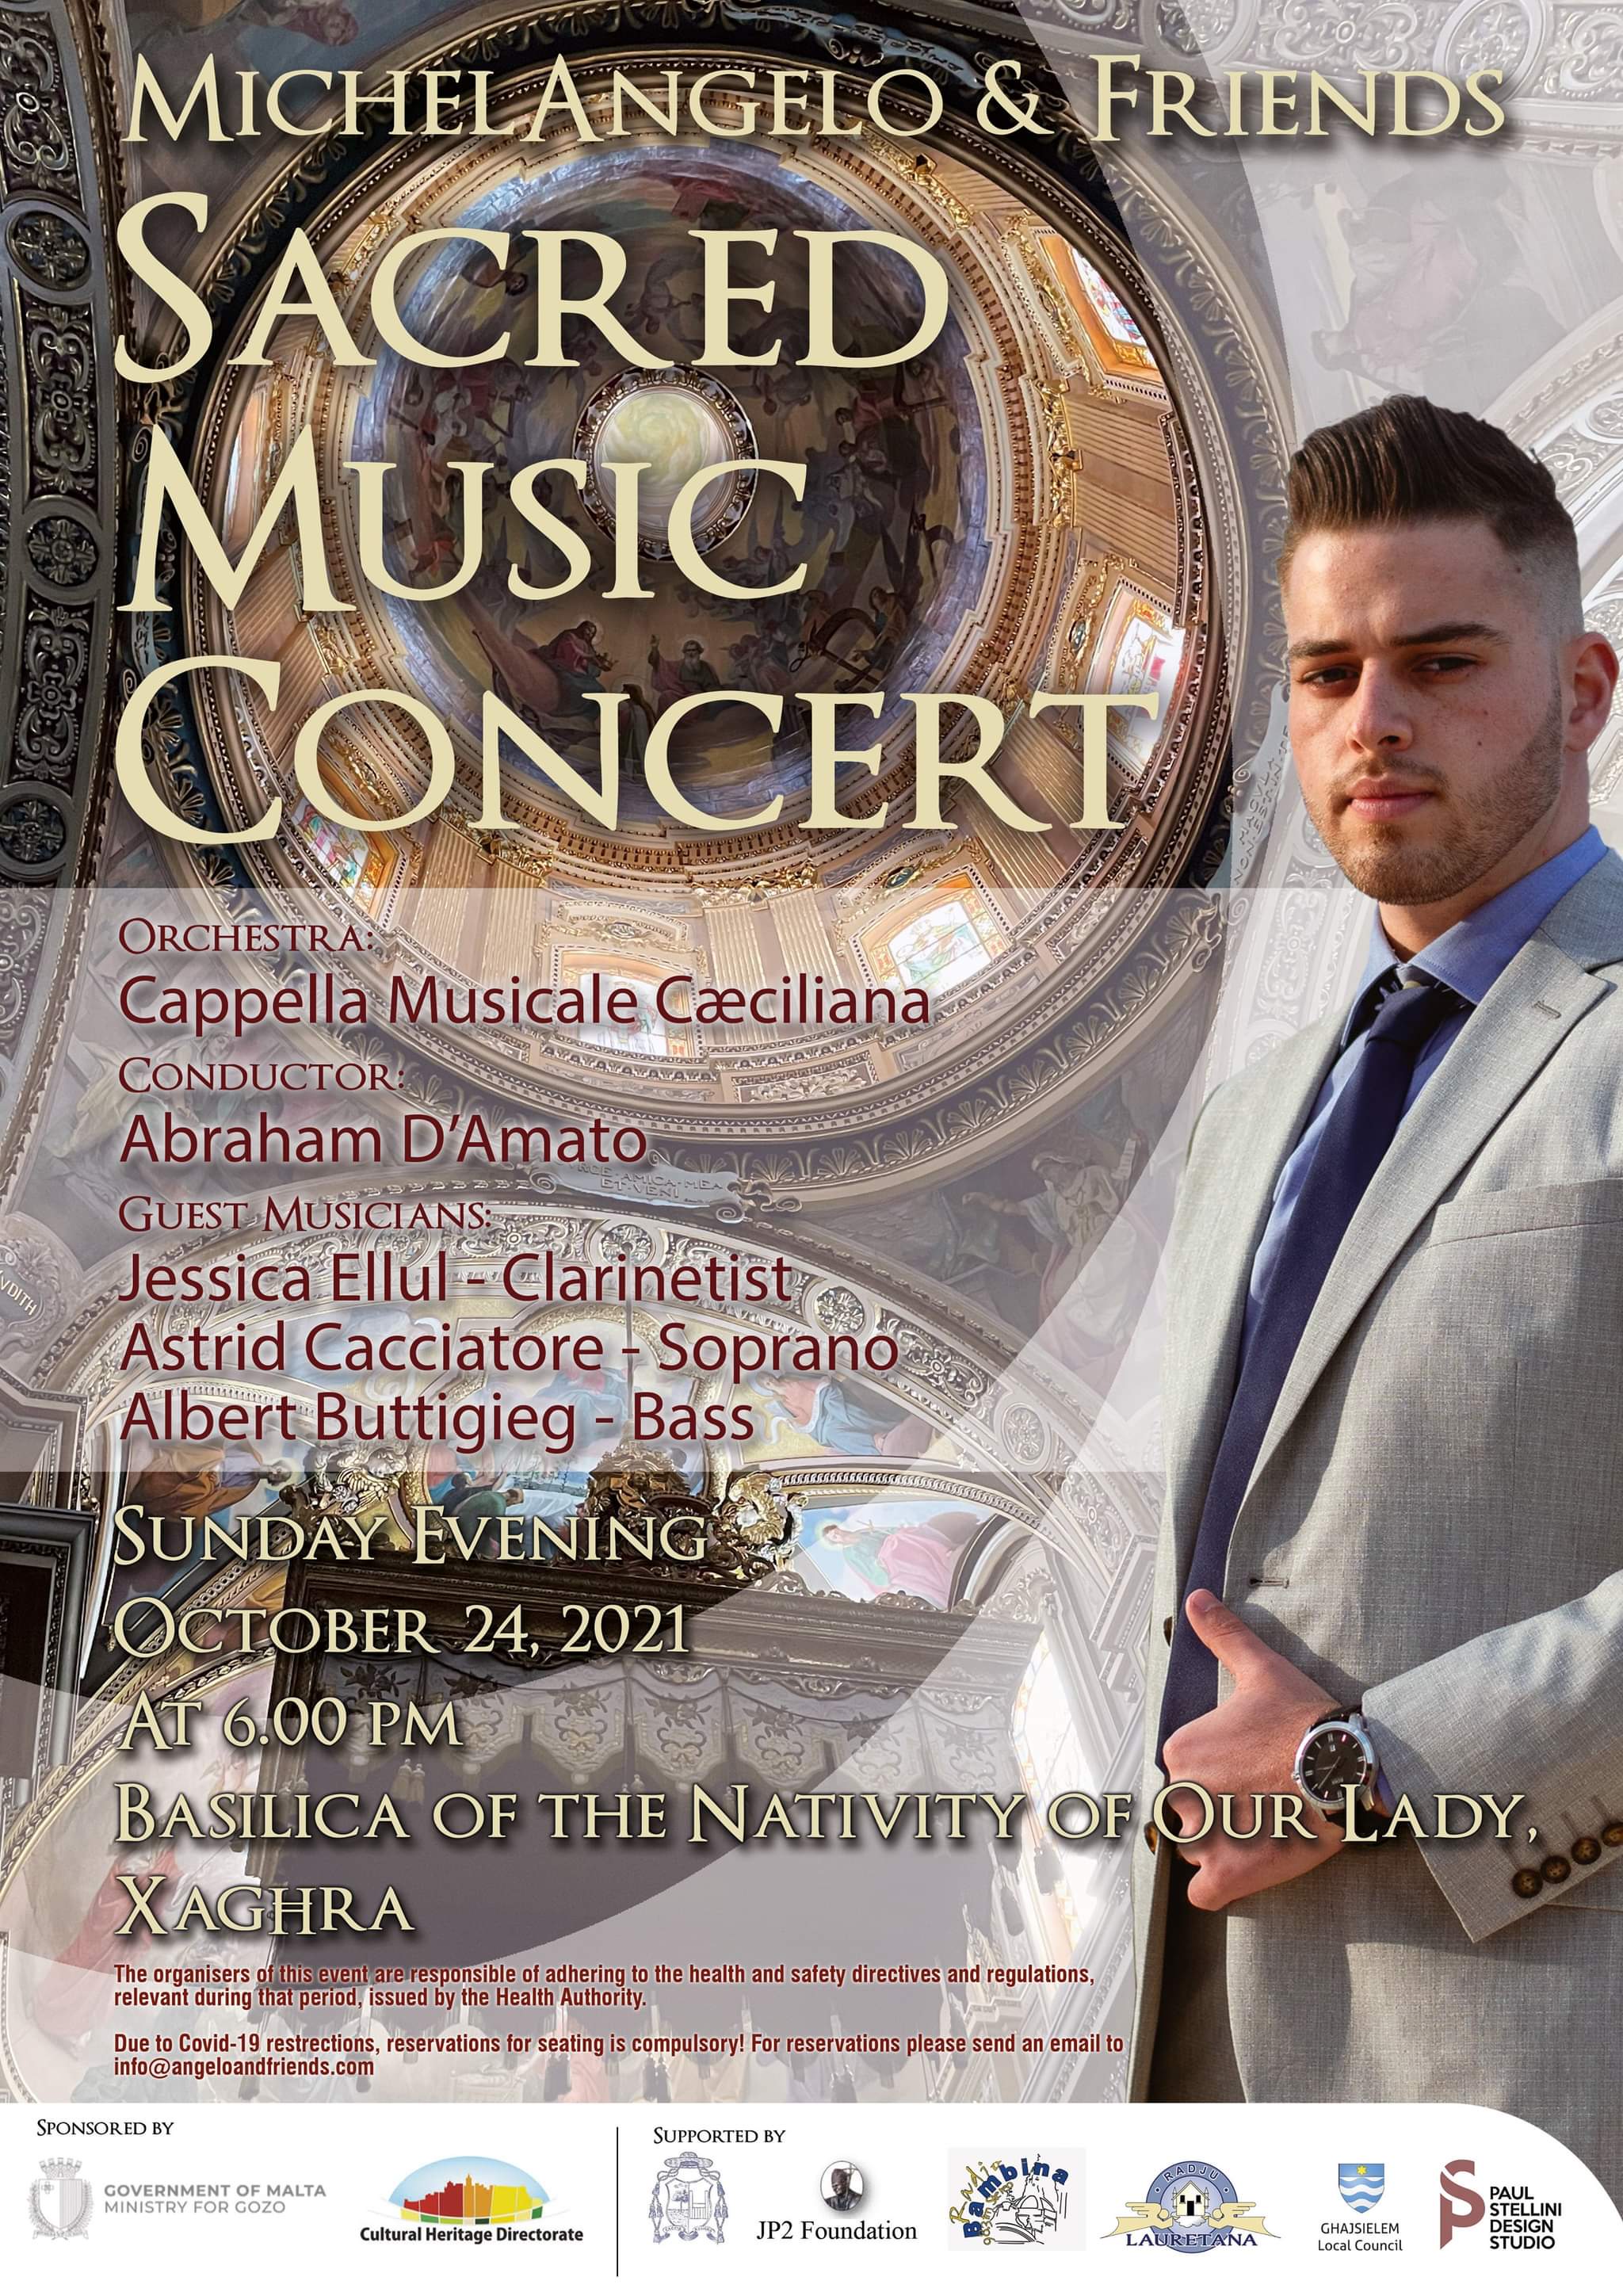 MichelAngelo & Friends Sacred Concert poster